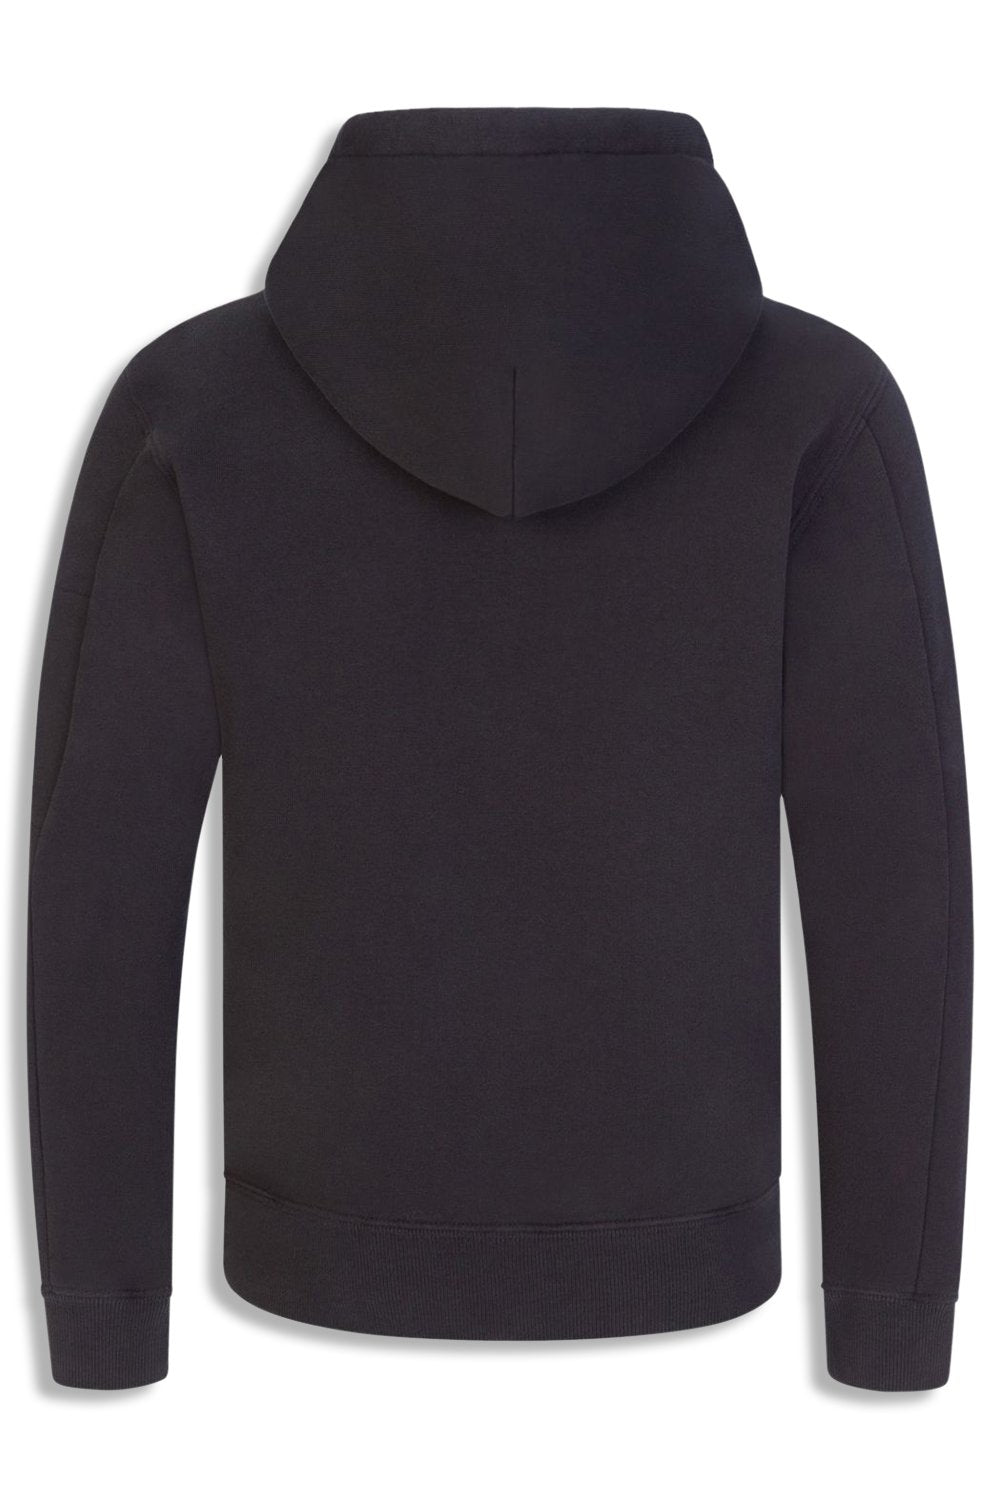 Men's C.P. Company Lens-Detail Cotton Black Hooded Sweatshirt